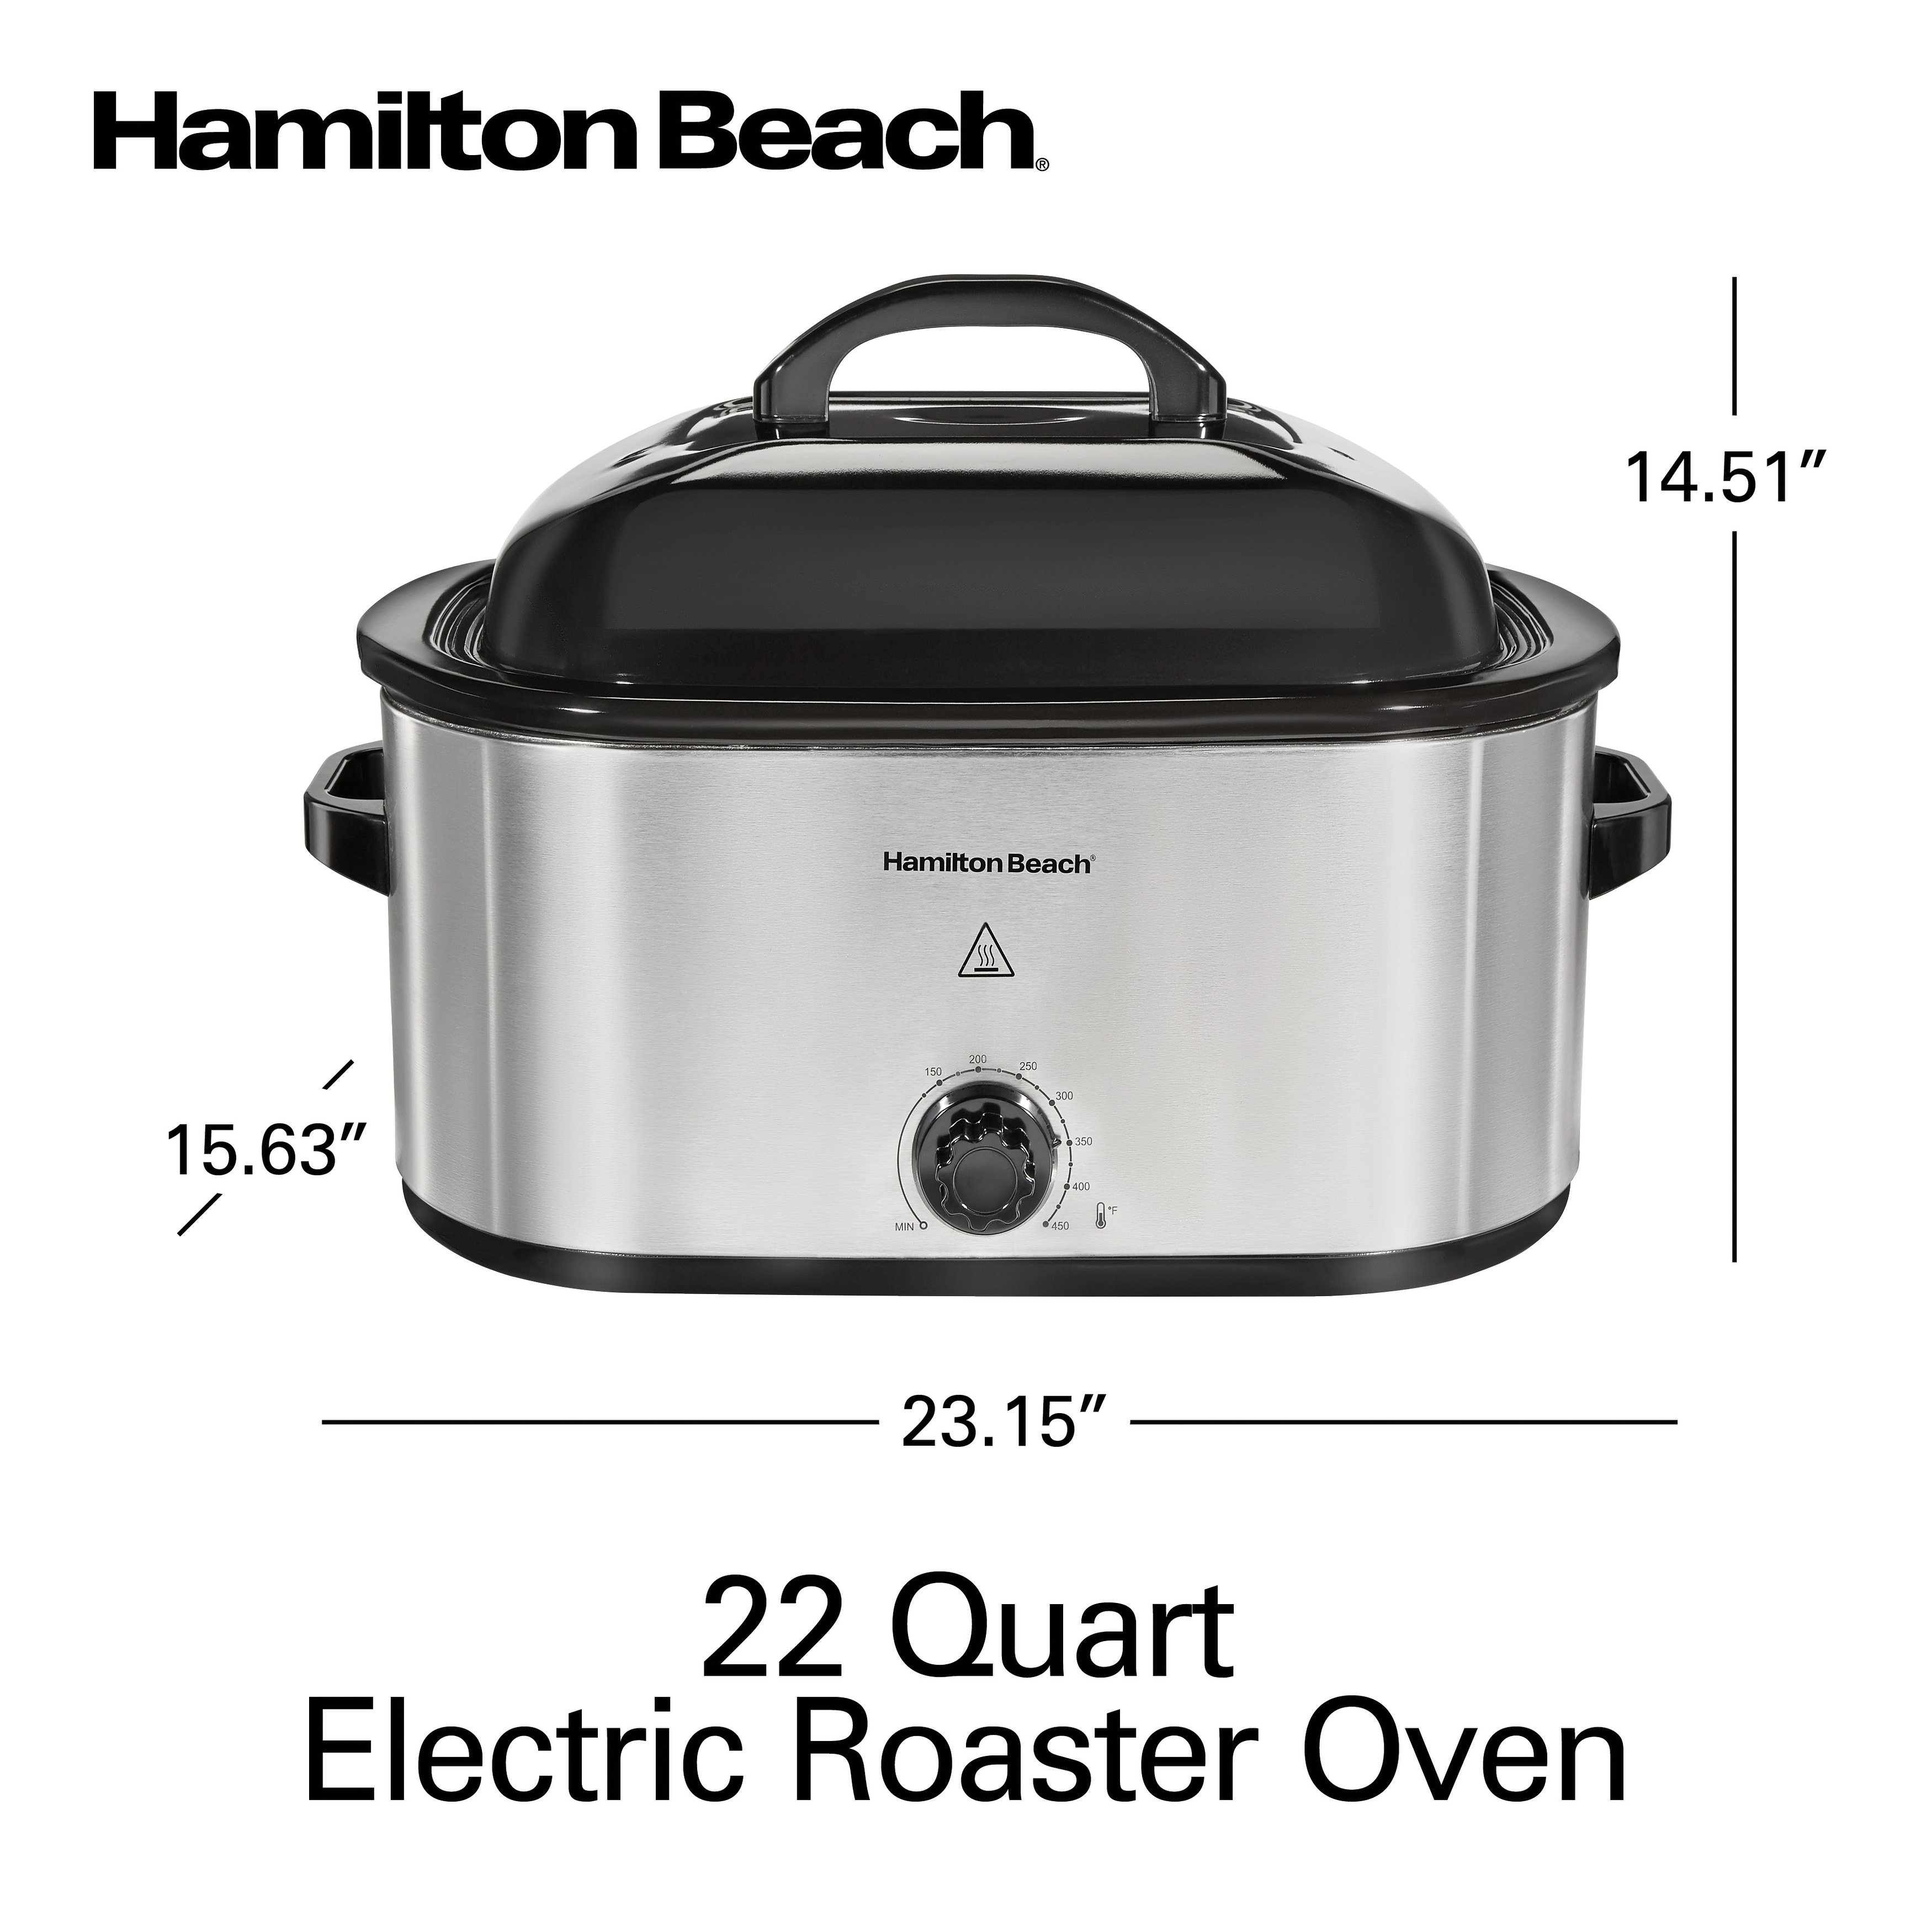 28 Lb Turkey Roaster 22 Quart Oven Steel Electric Cooker NEW